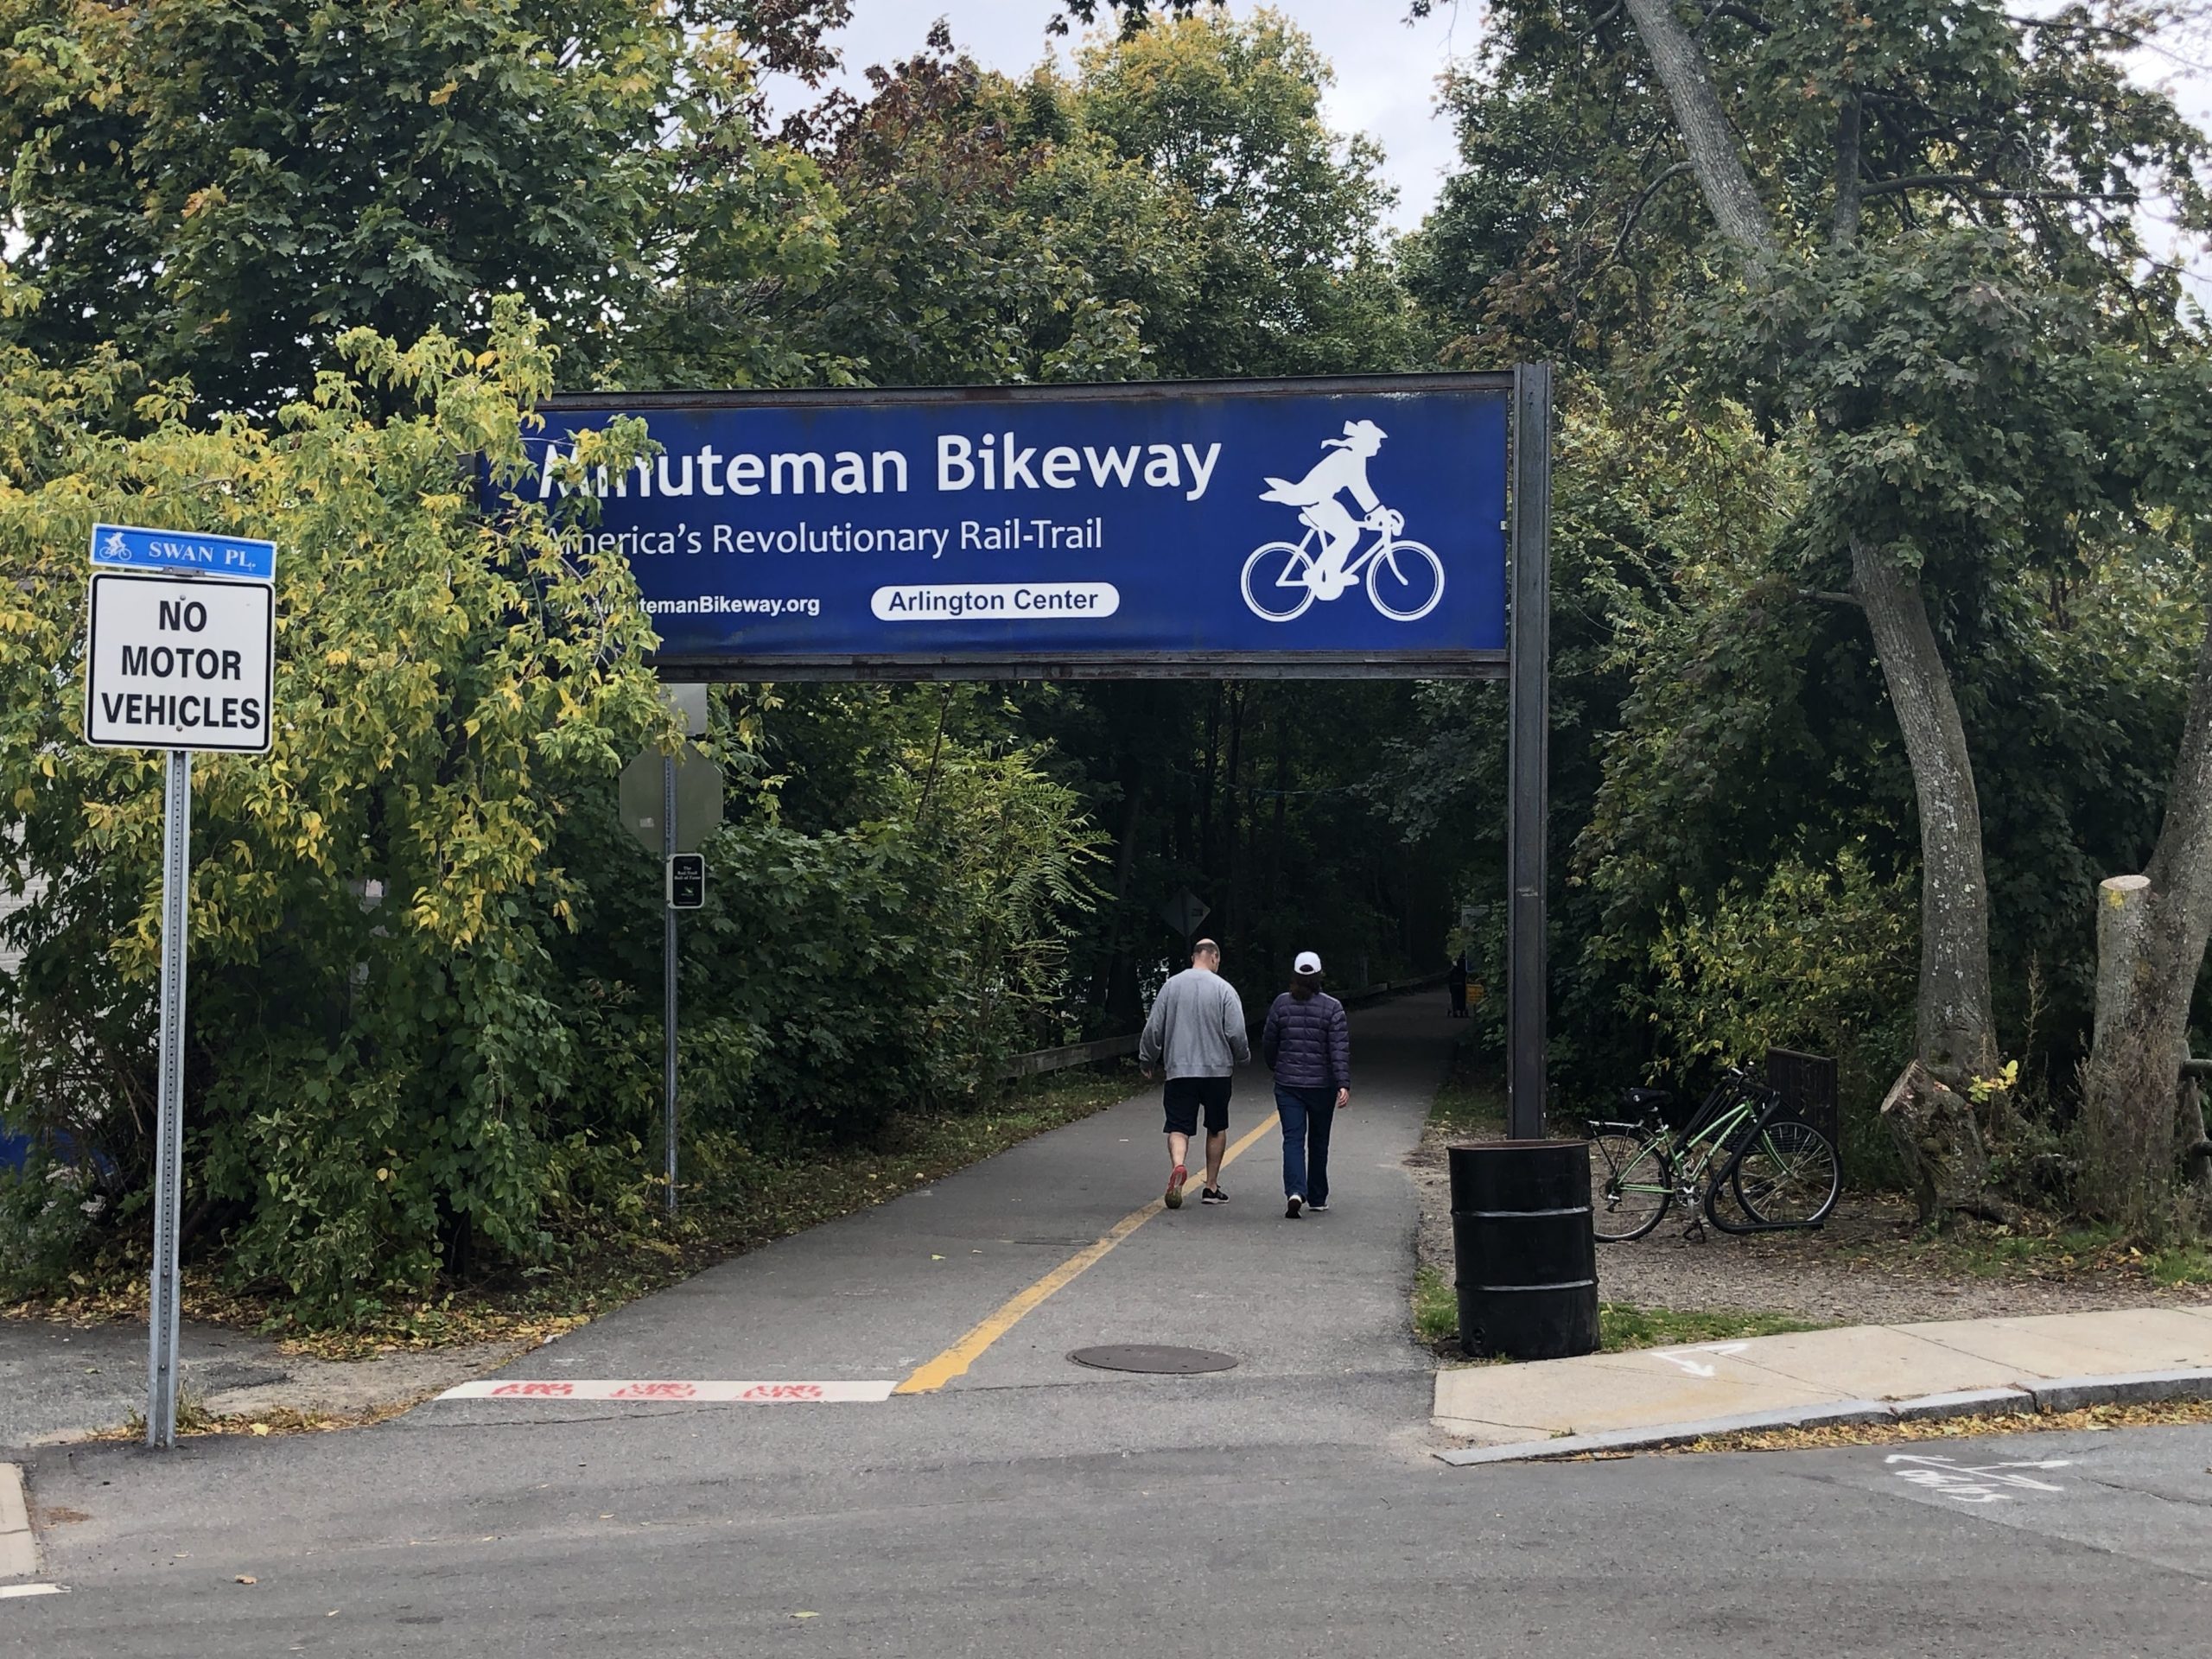 Minuteman Bikeway Entrance